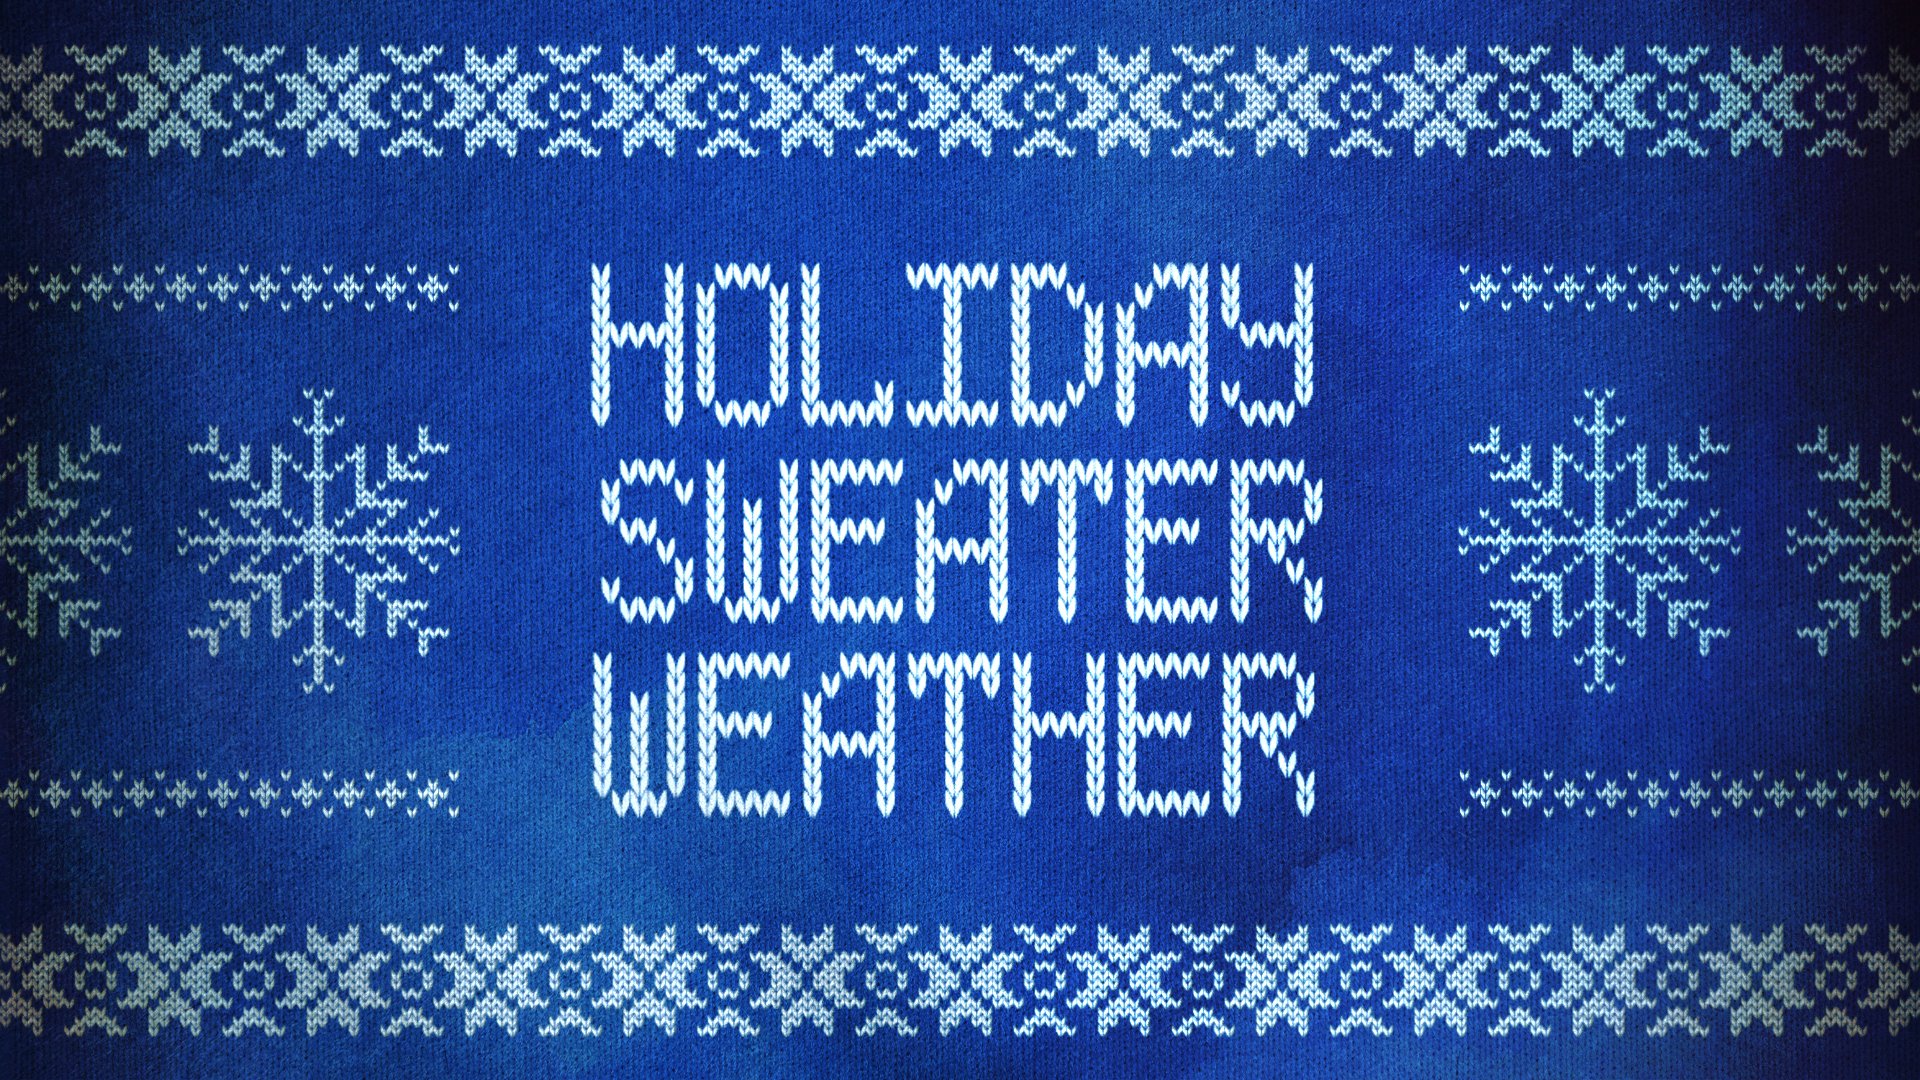 HolidaySweaterWeather_Social_16x9_TitleCard_01a.jpg